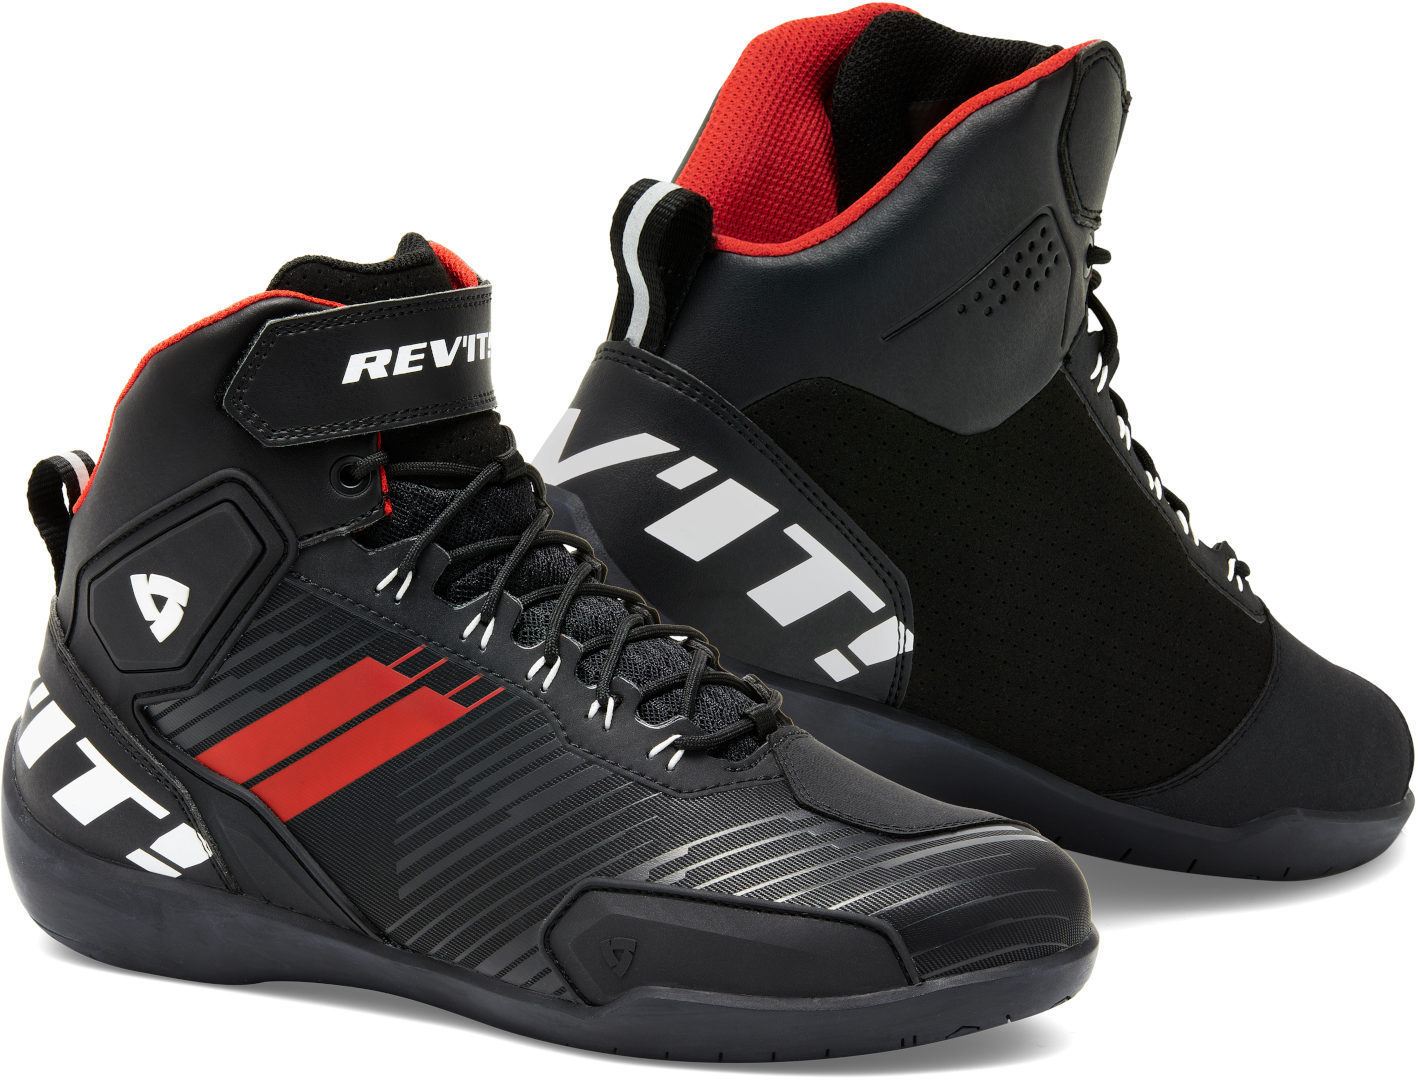 Revit G-Force Motorradschuhe, schwarz-weiss-rot, Größe 43 für Frauen, schwarz-weiss-rot, Größe 43